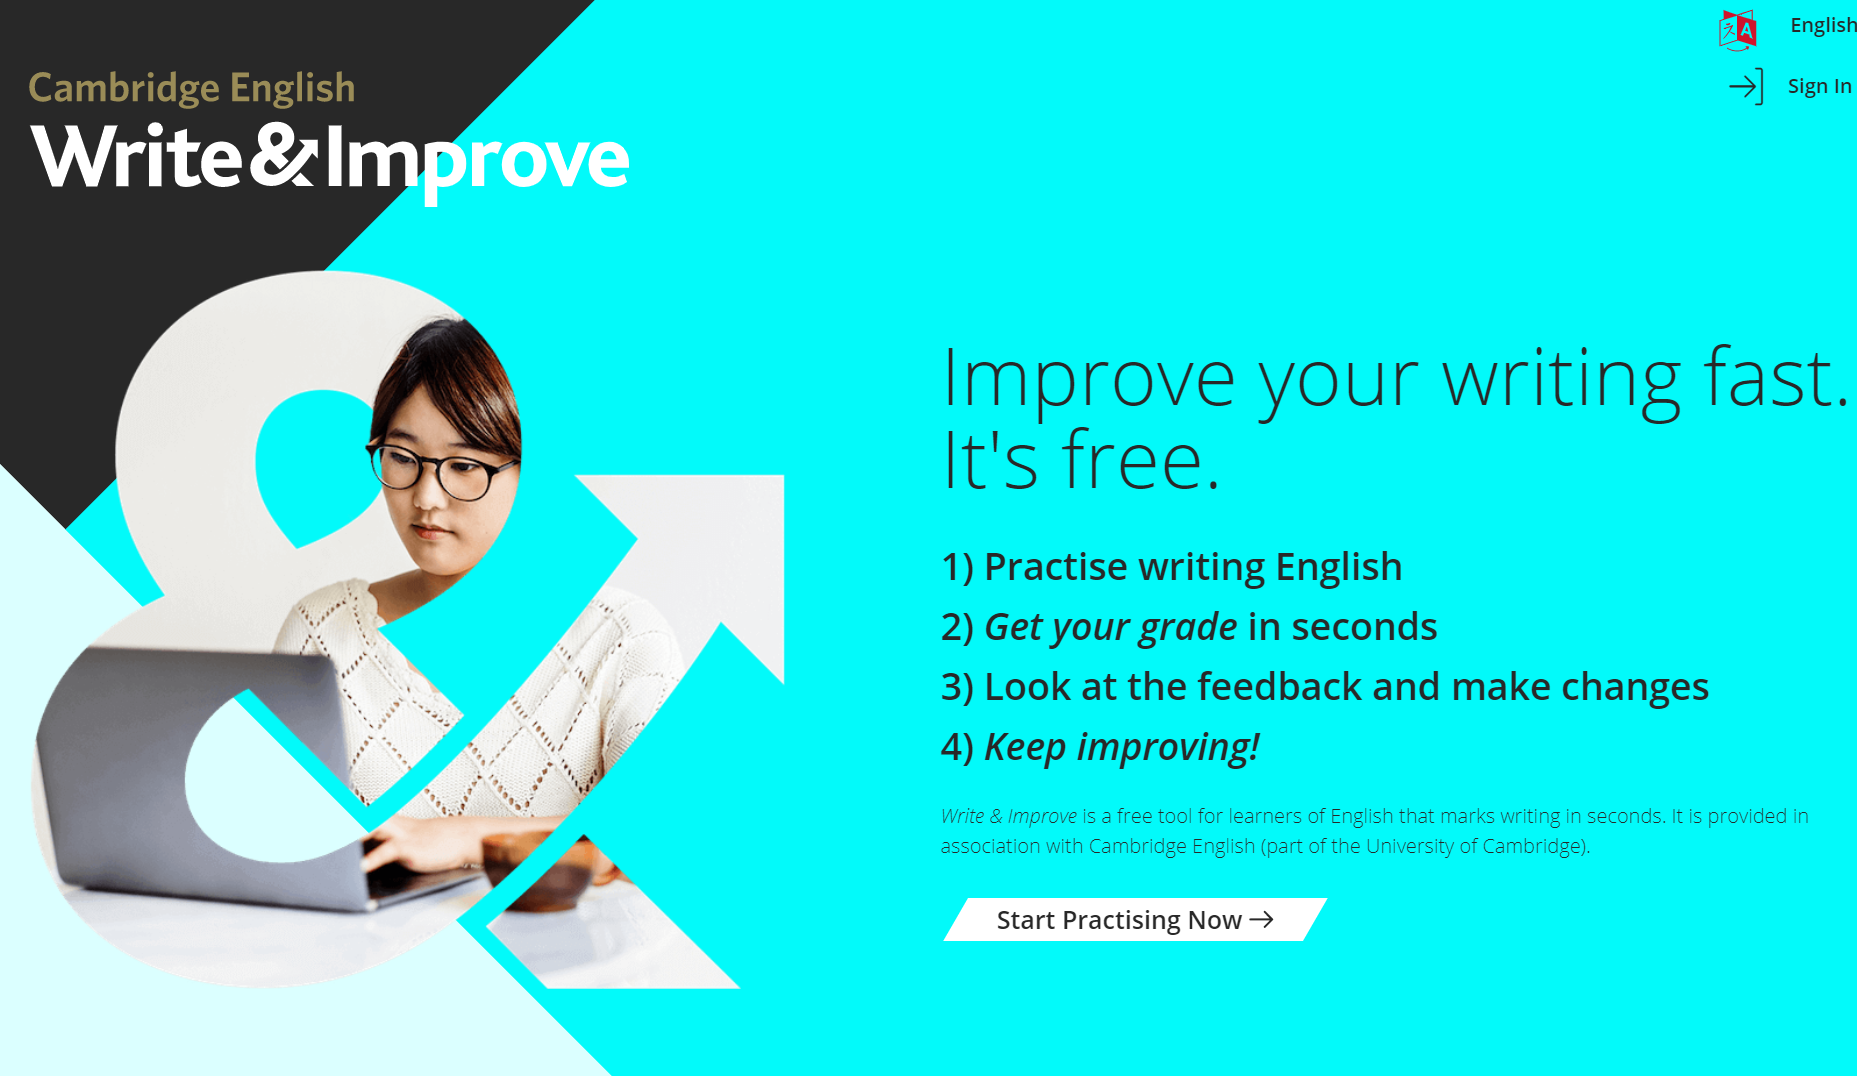 Write and Improve - Trang website chữa Writing miễn phí của Cambridge